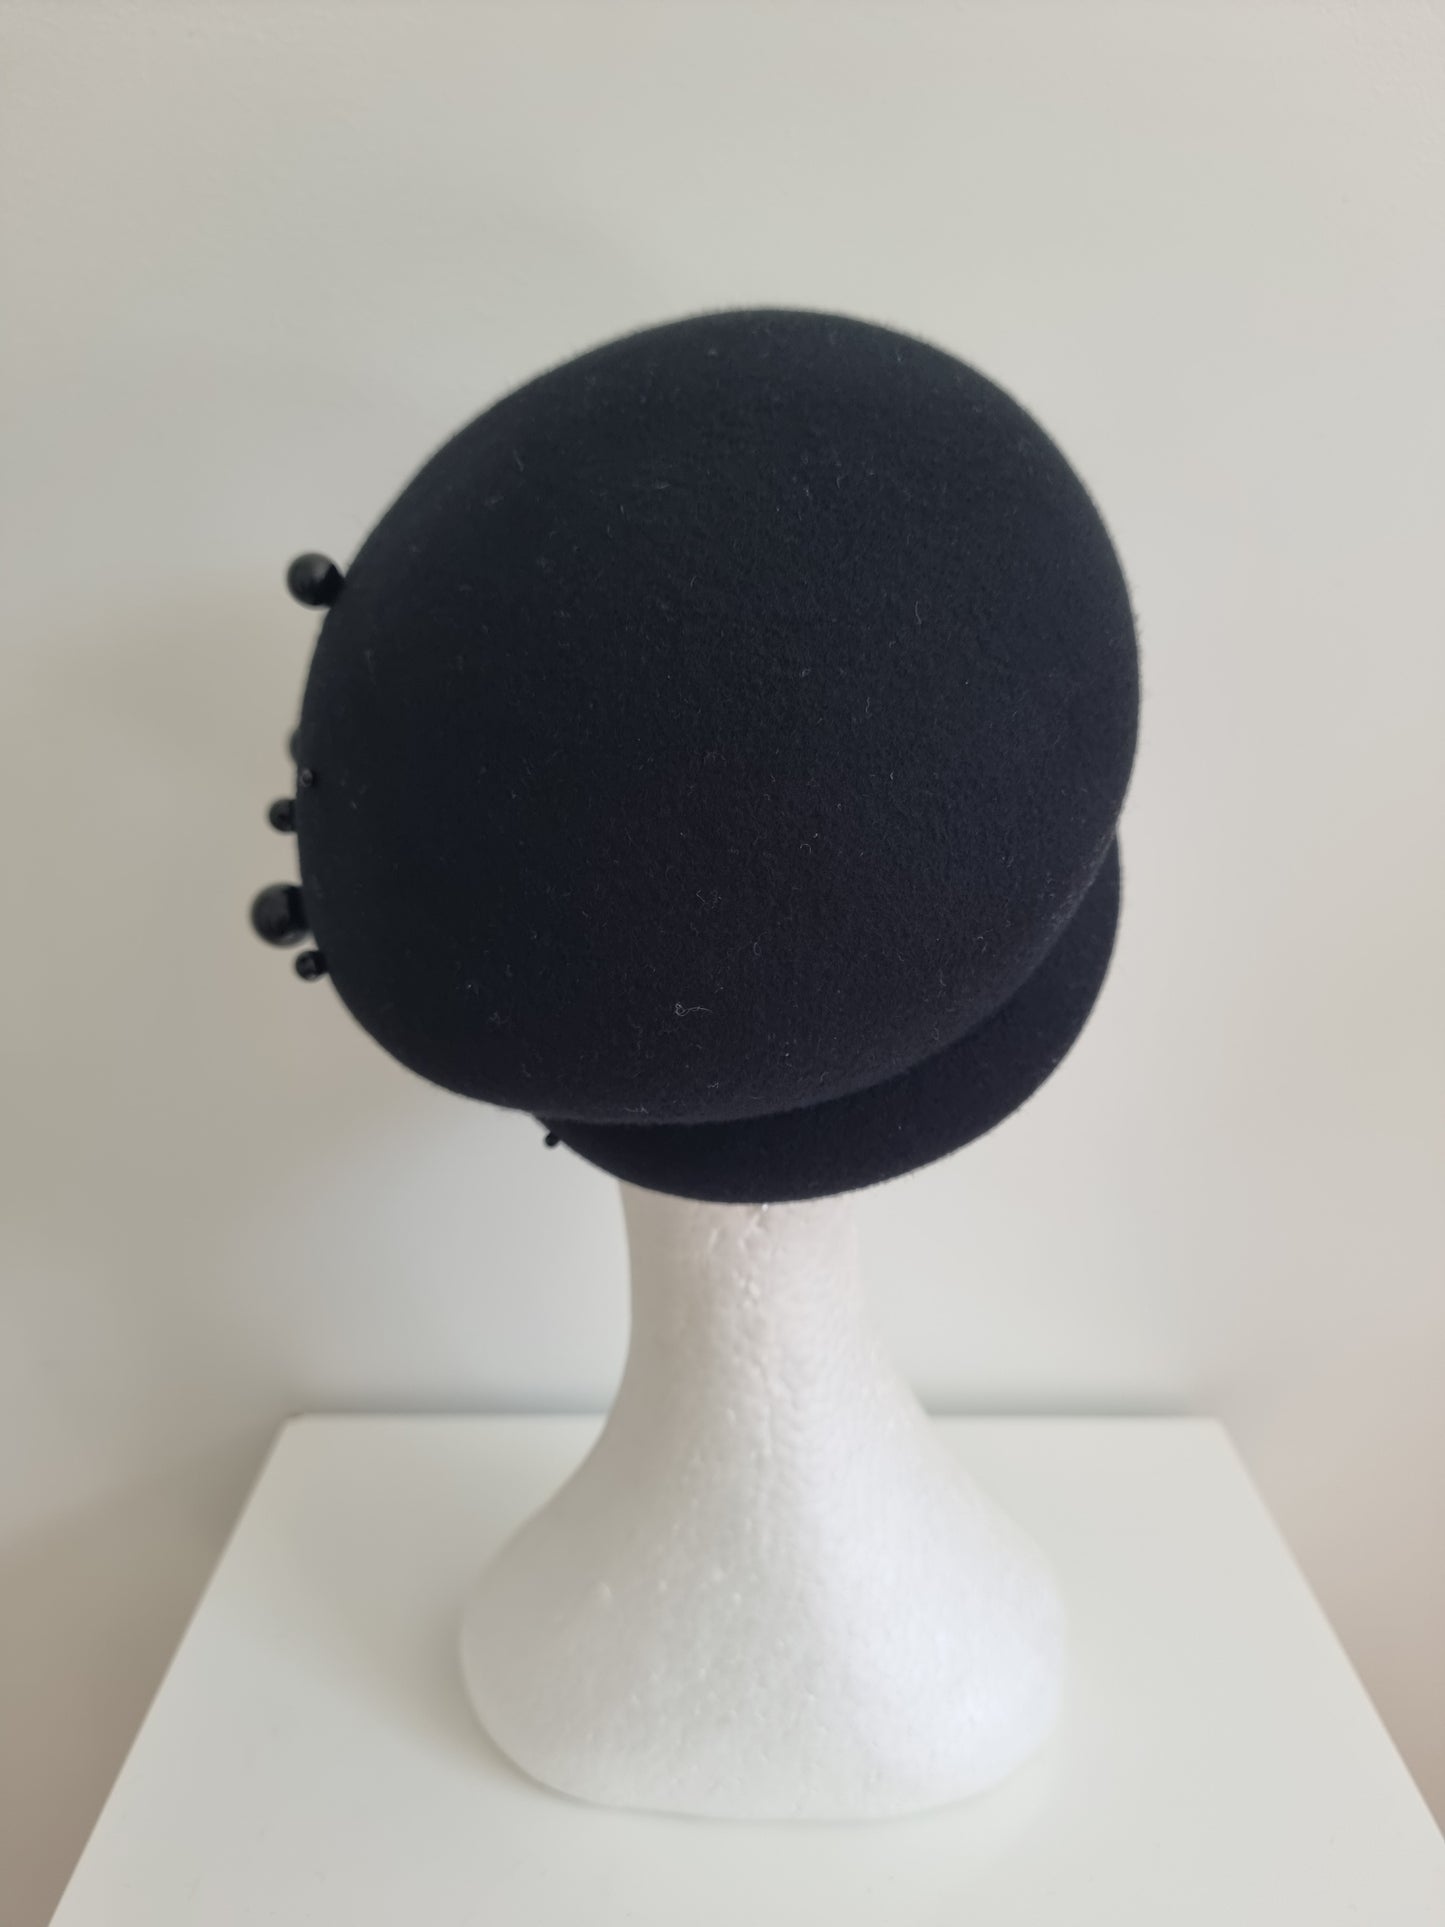 Miss Jamesion. Womens Black wool felt cap with pearl detailing